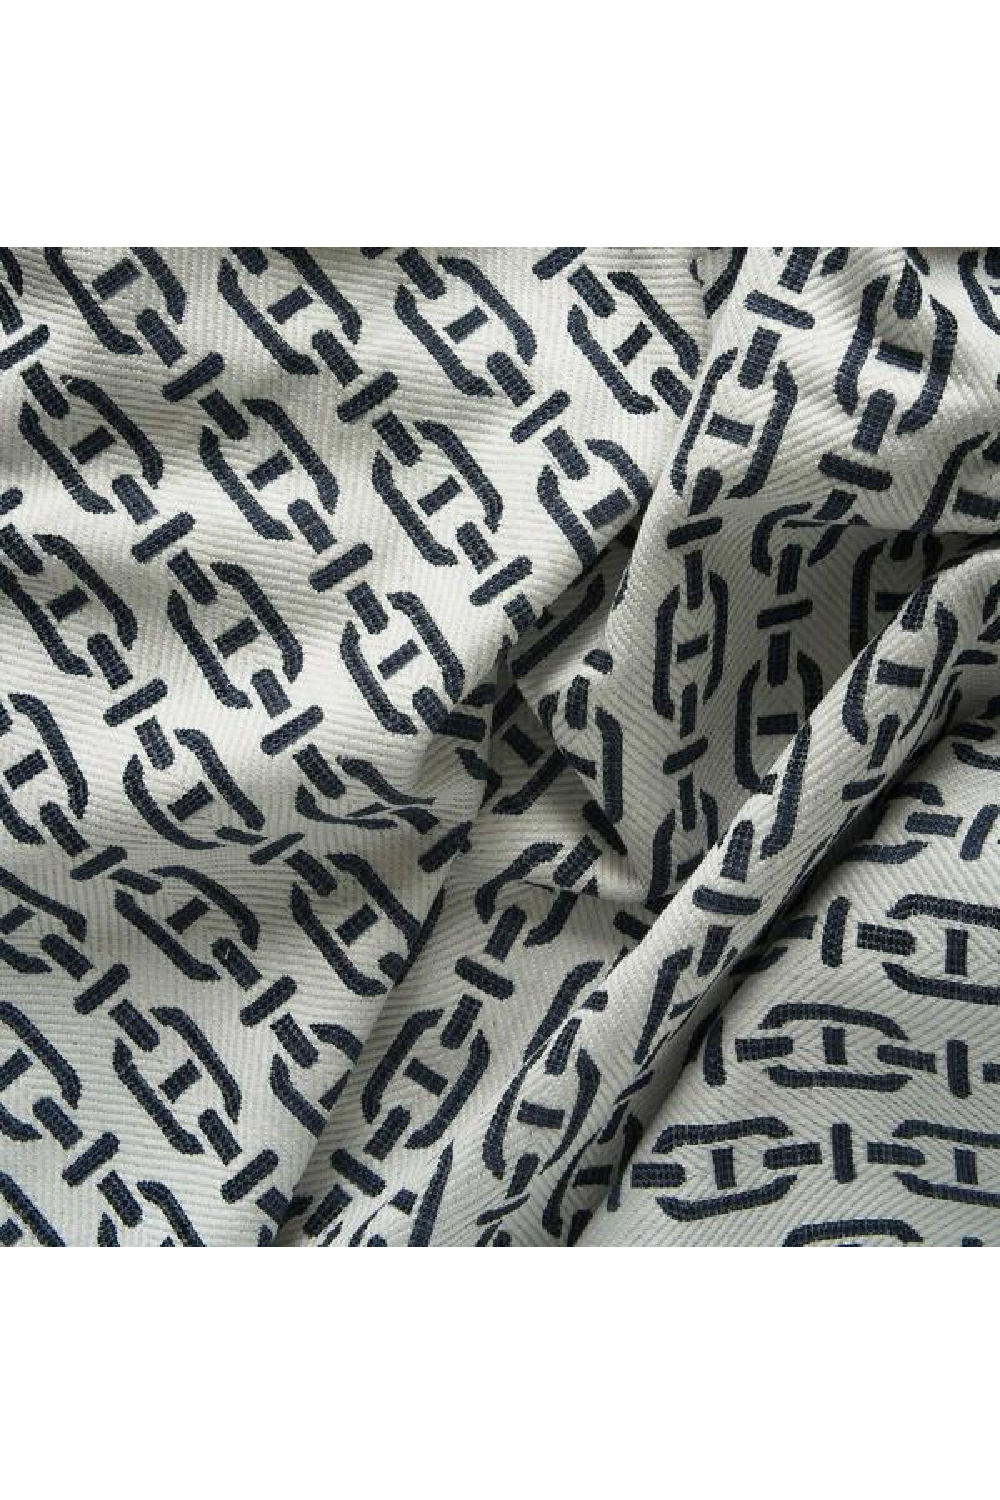 Chain Link Pattern Square Cushion | Andrew Martin Burlington | OROA